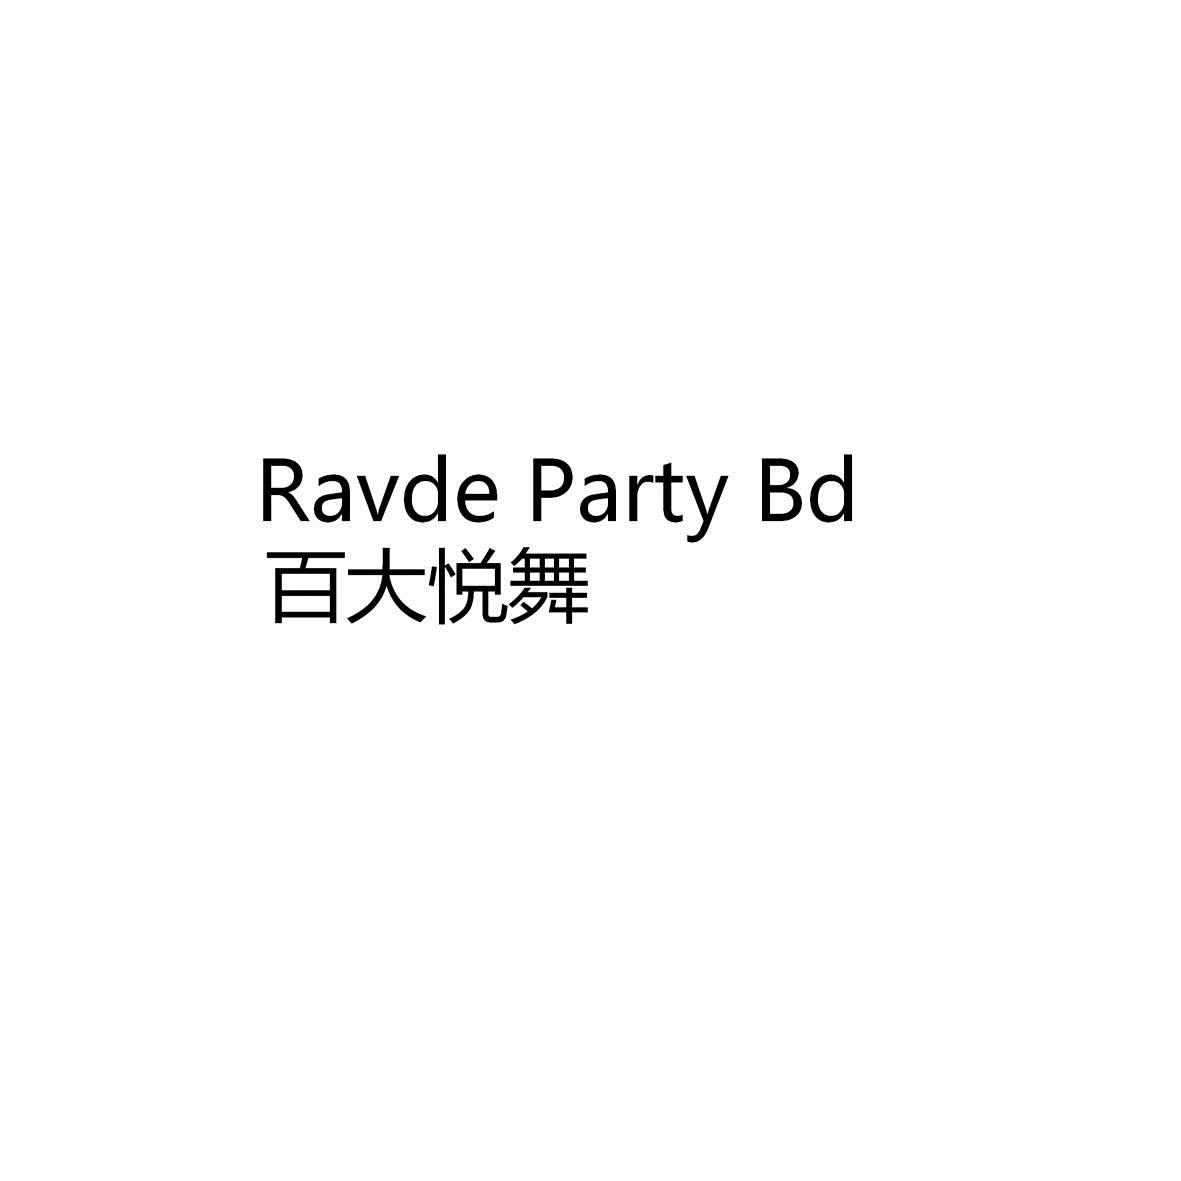 RAVDE PARTY BD 百大悦舞